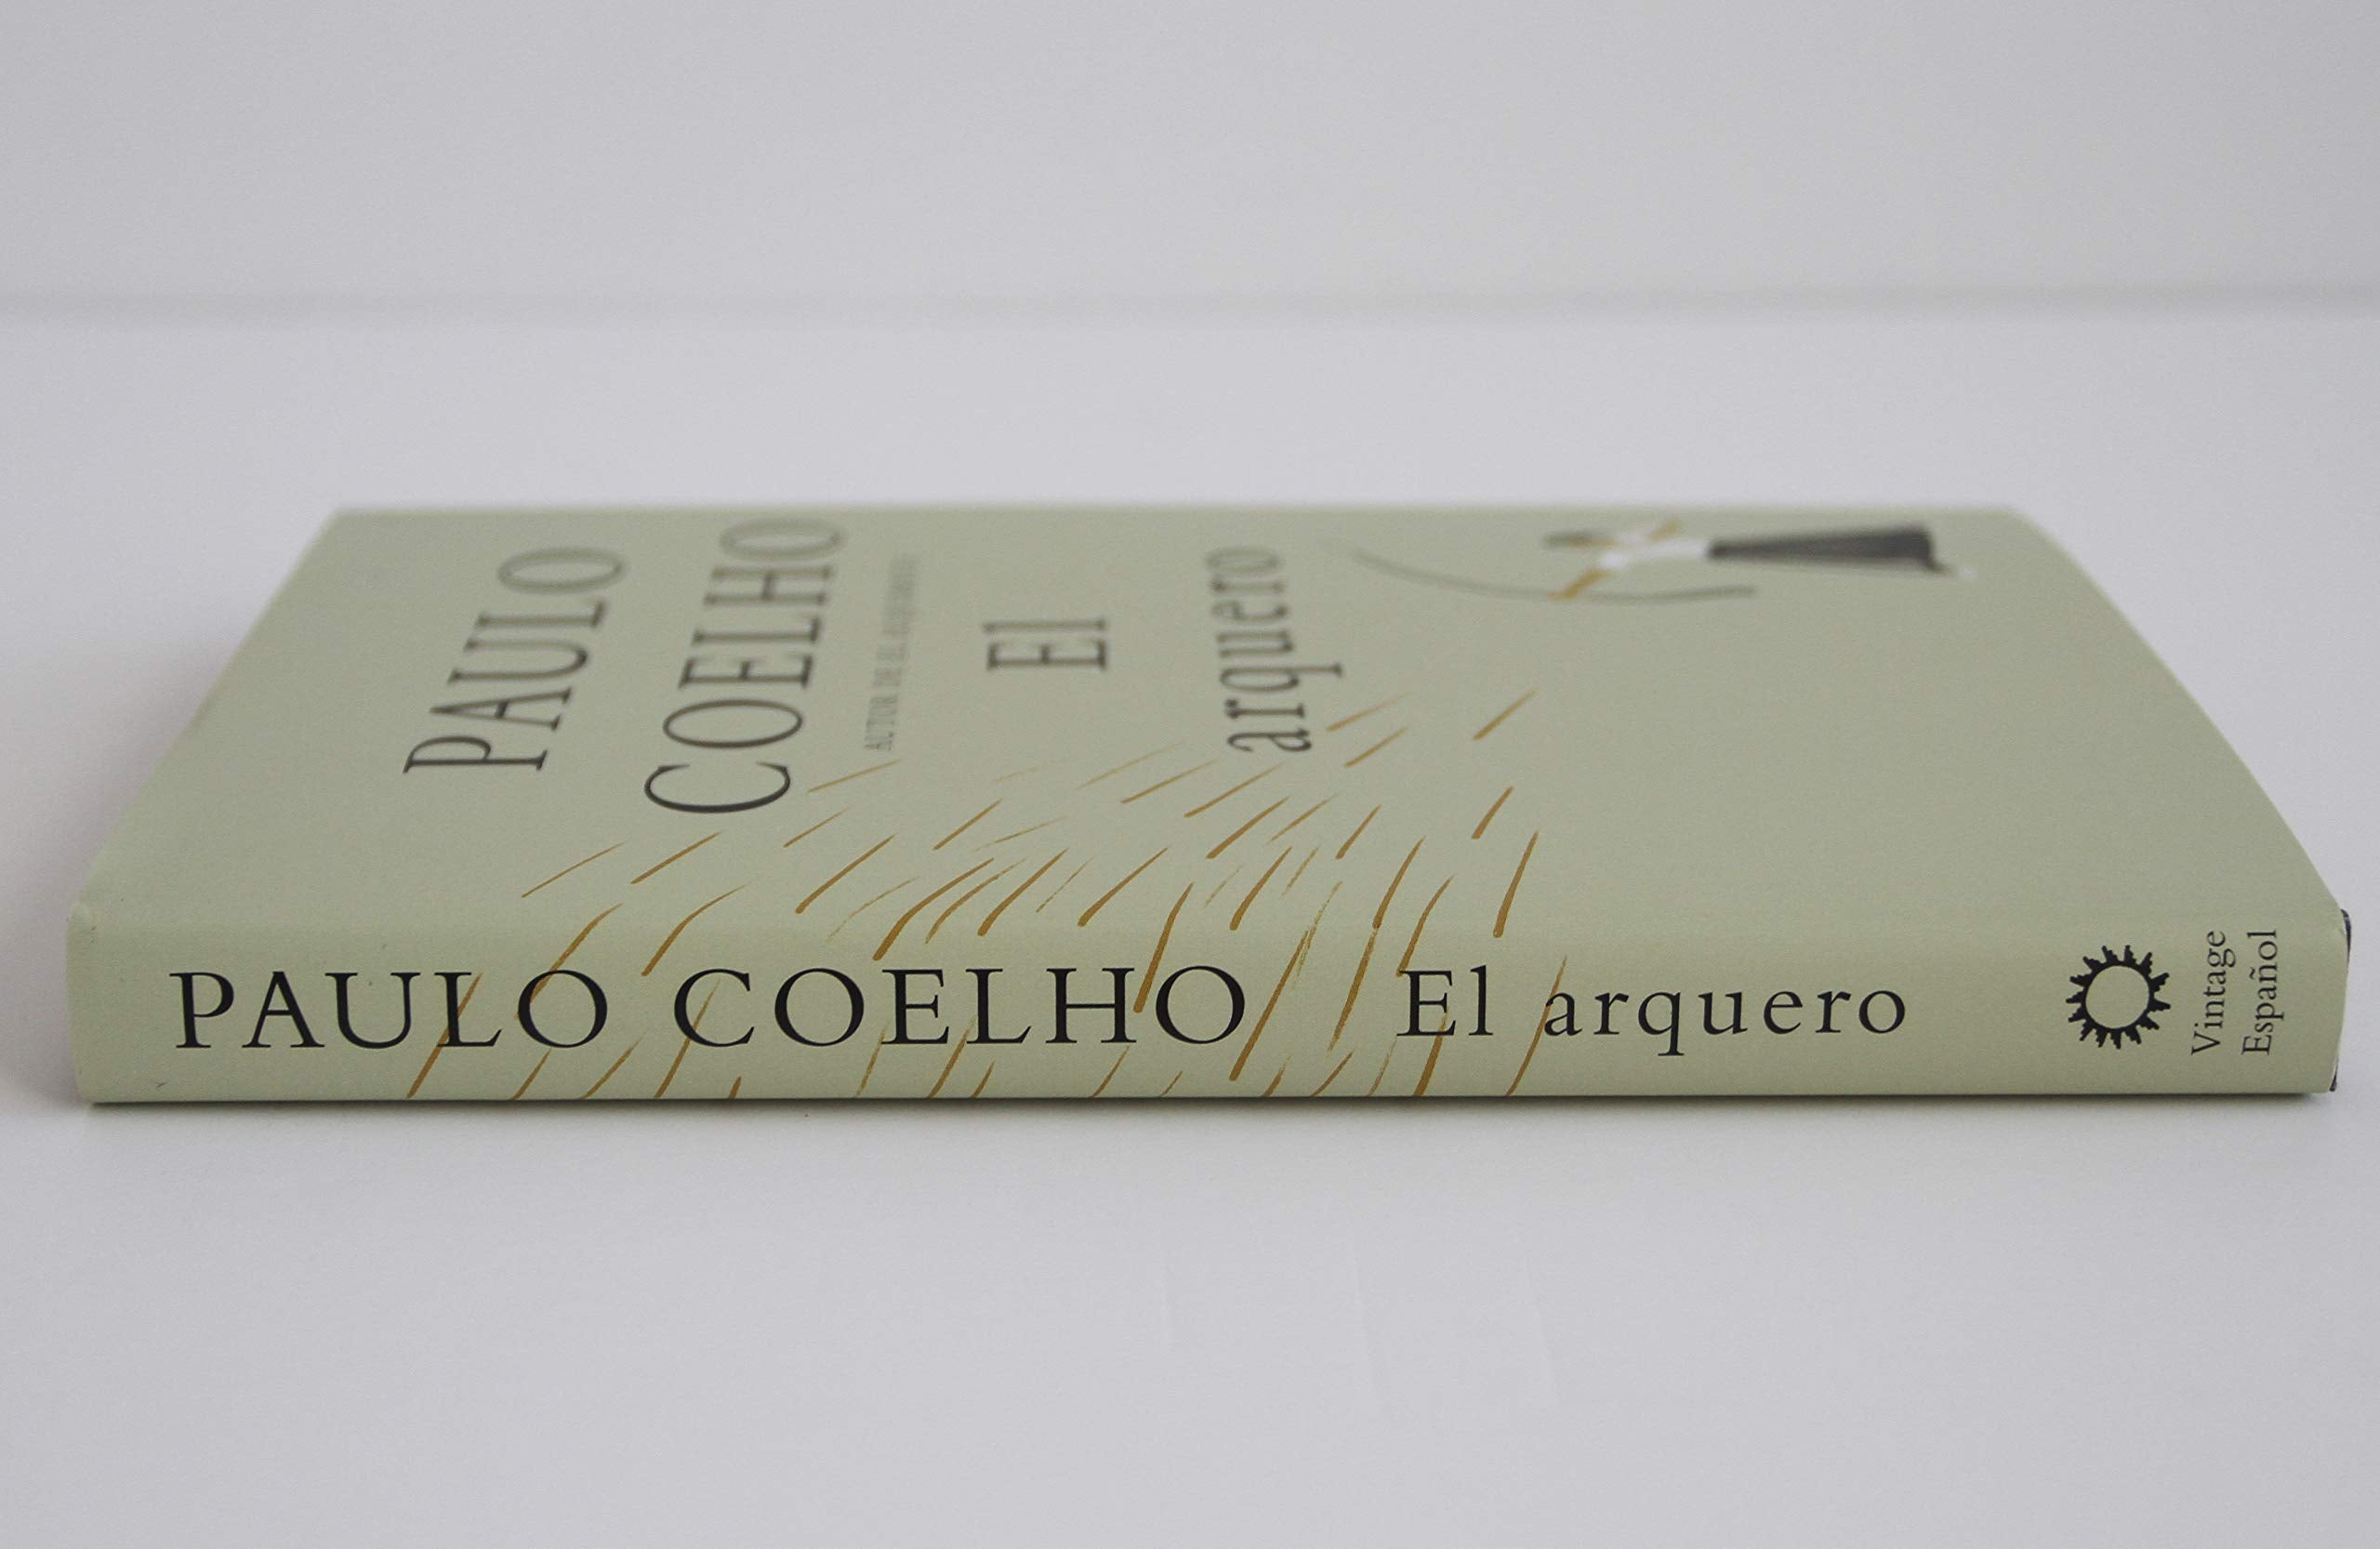 El arquero / The Archer (Spanish Edition - Hardcover)